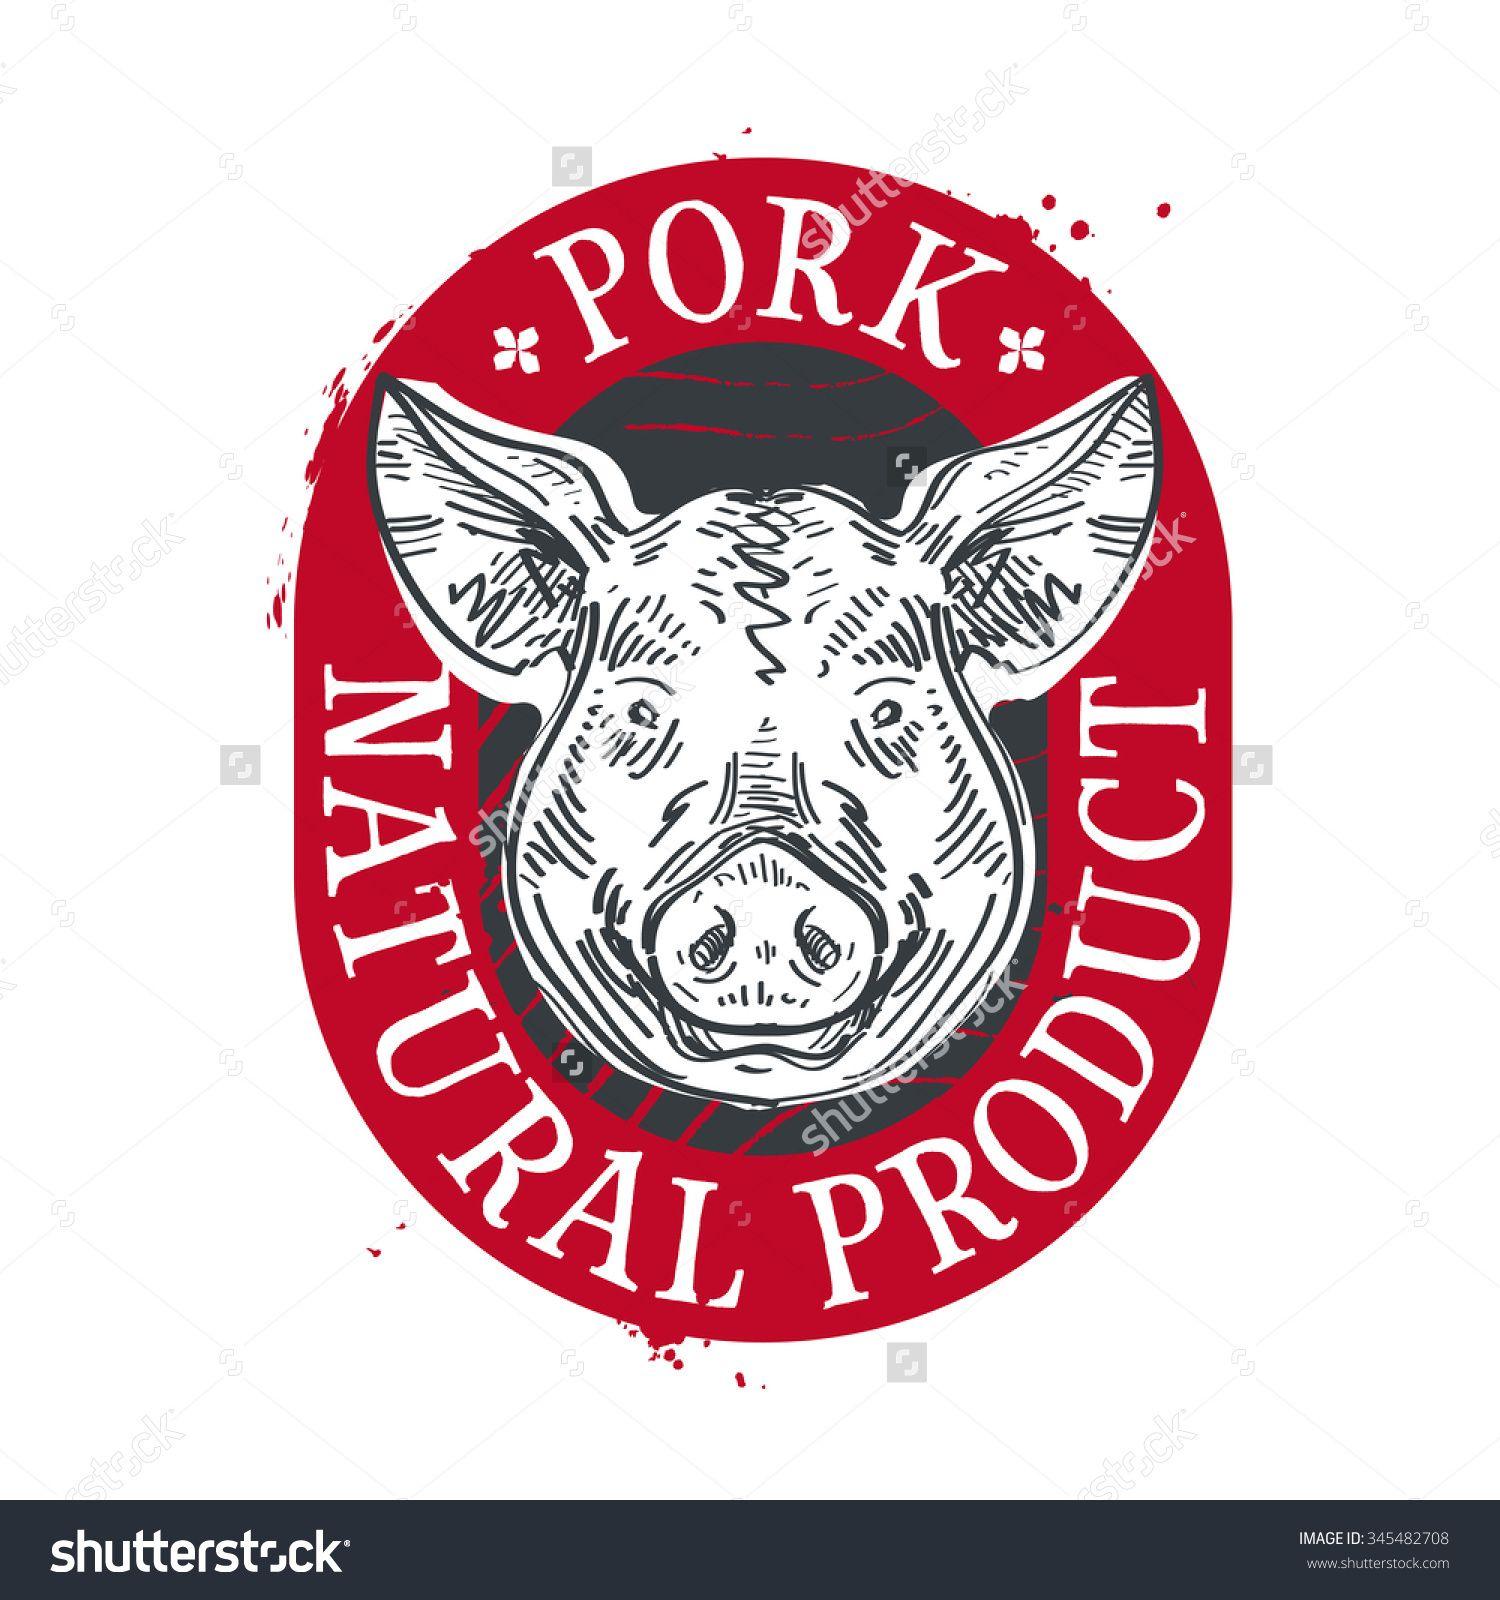 Pork Logo - Pork Vector Logo Design Template. Pig Or Meat Icon